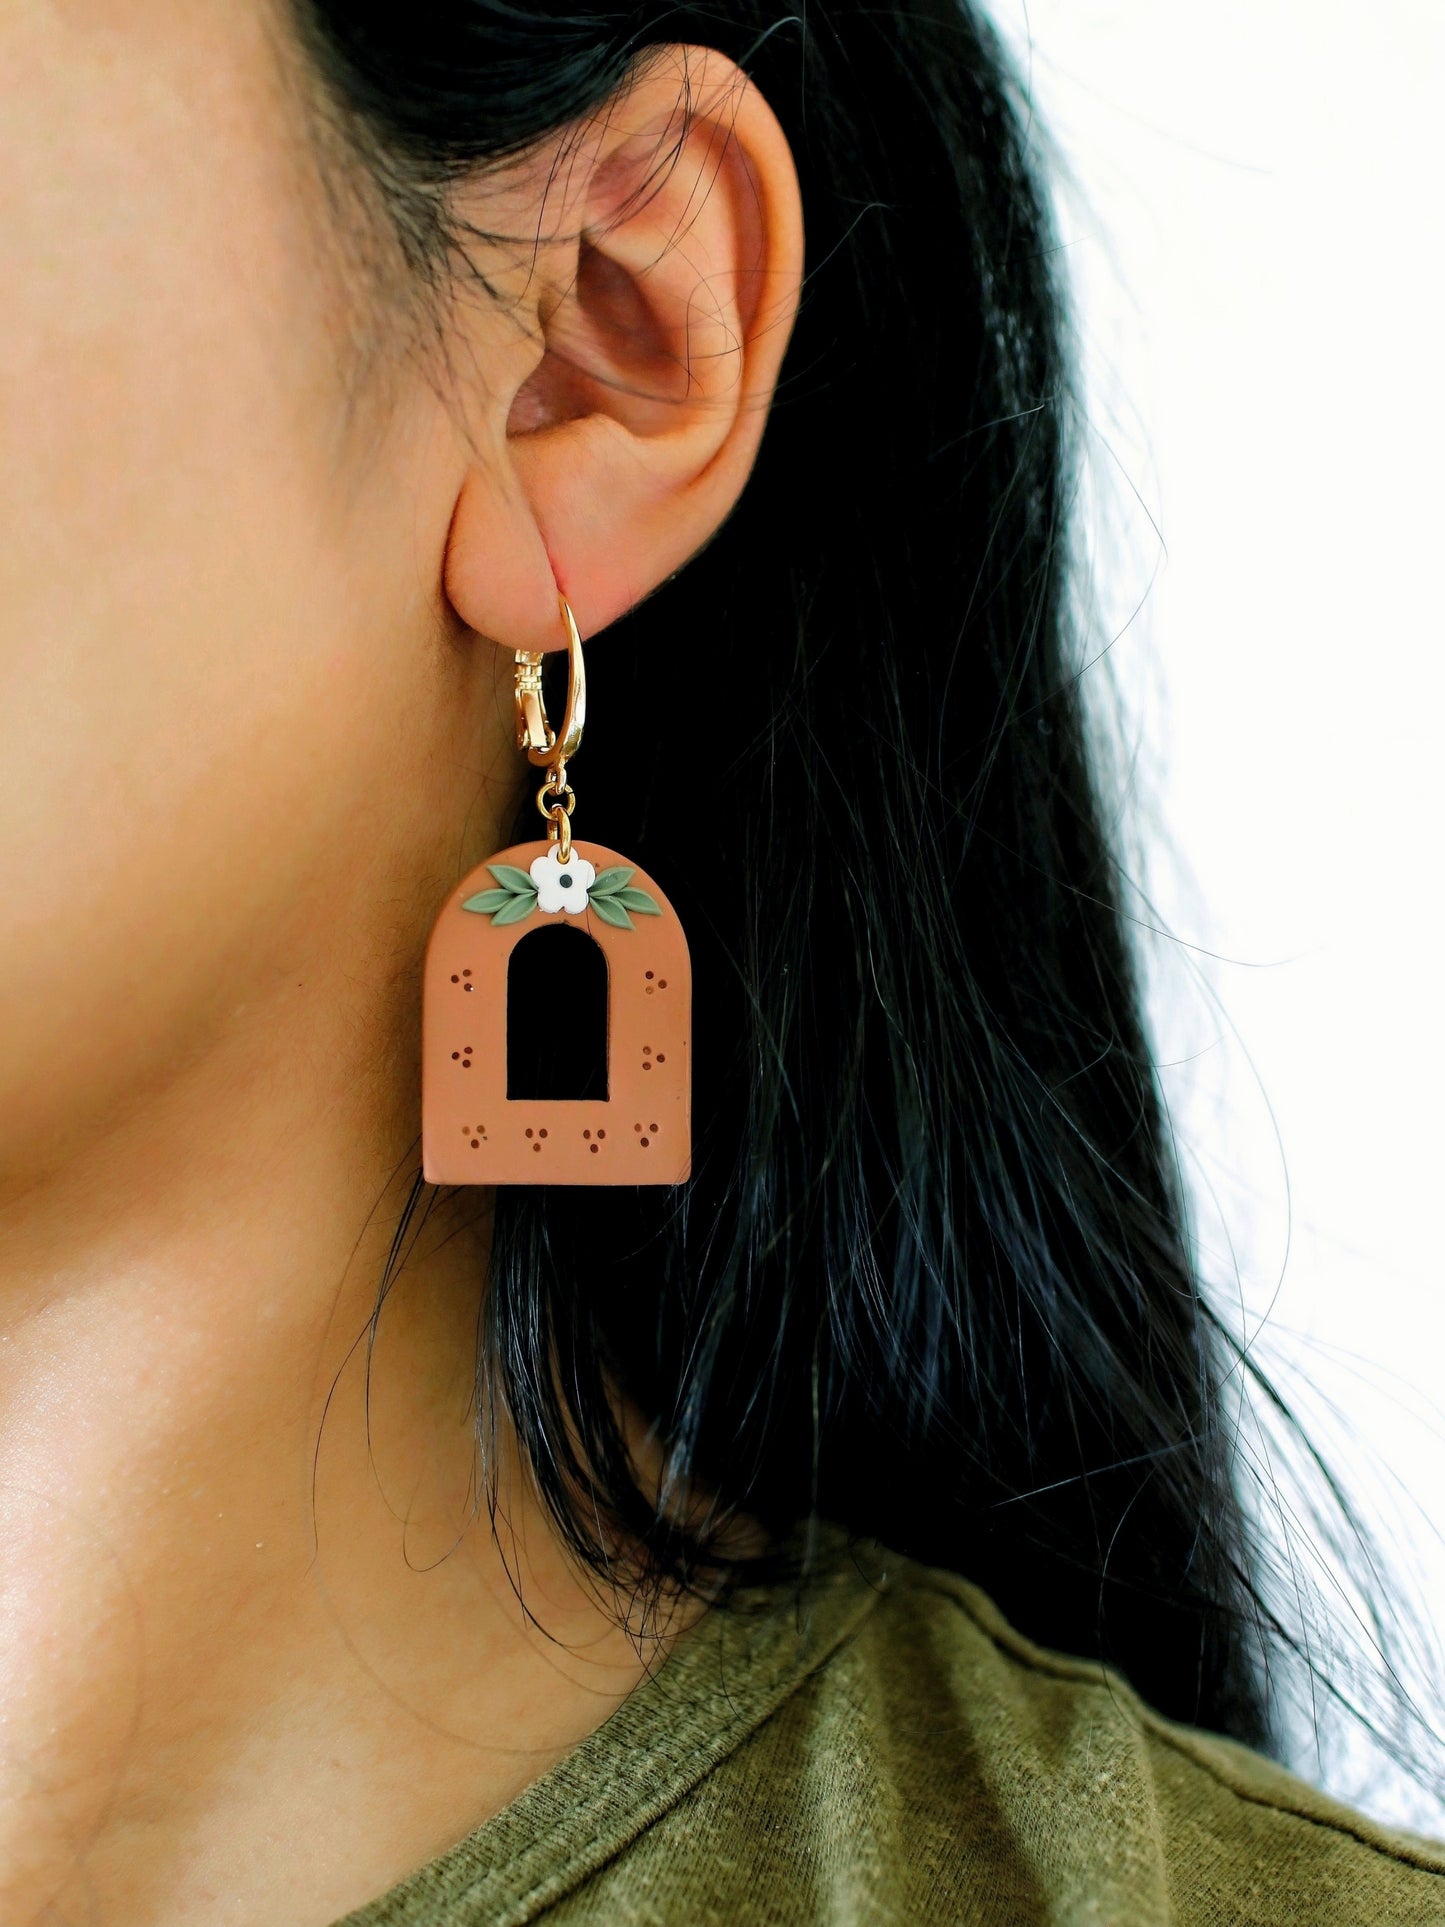 Leti - Mexican Terracotta (Barro) inspired Earrings